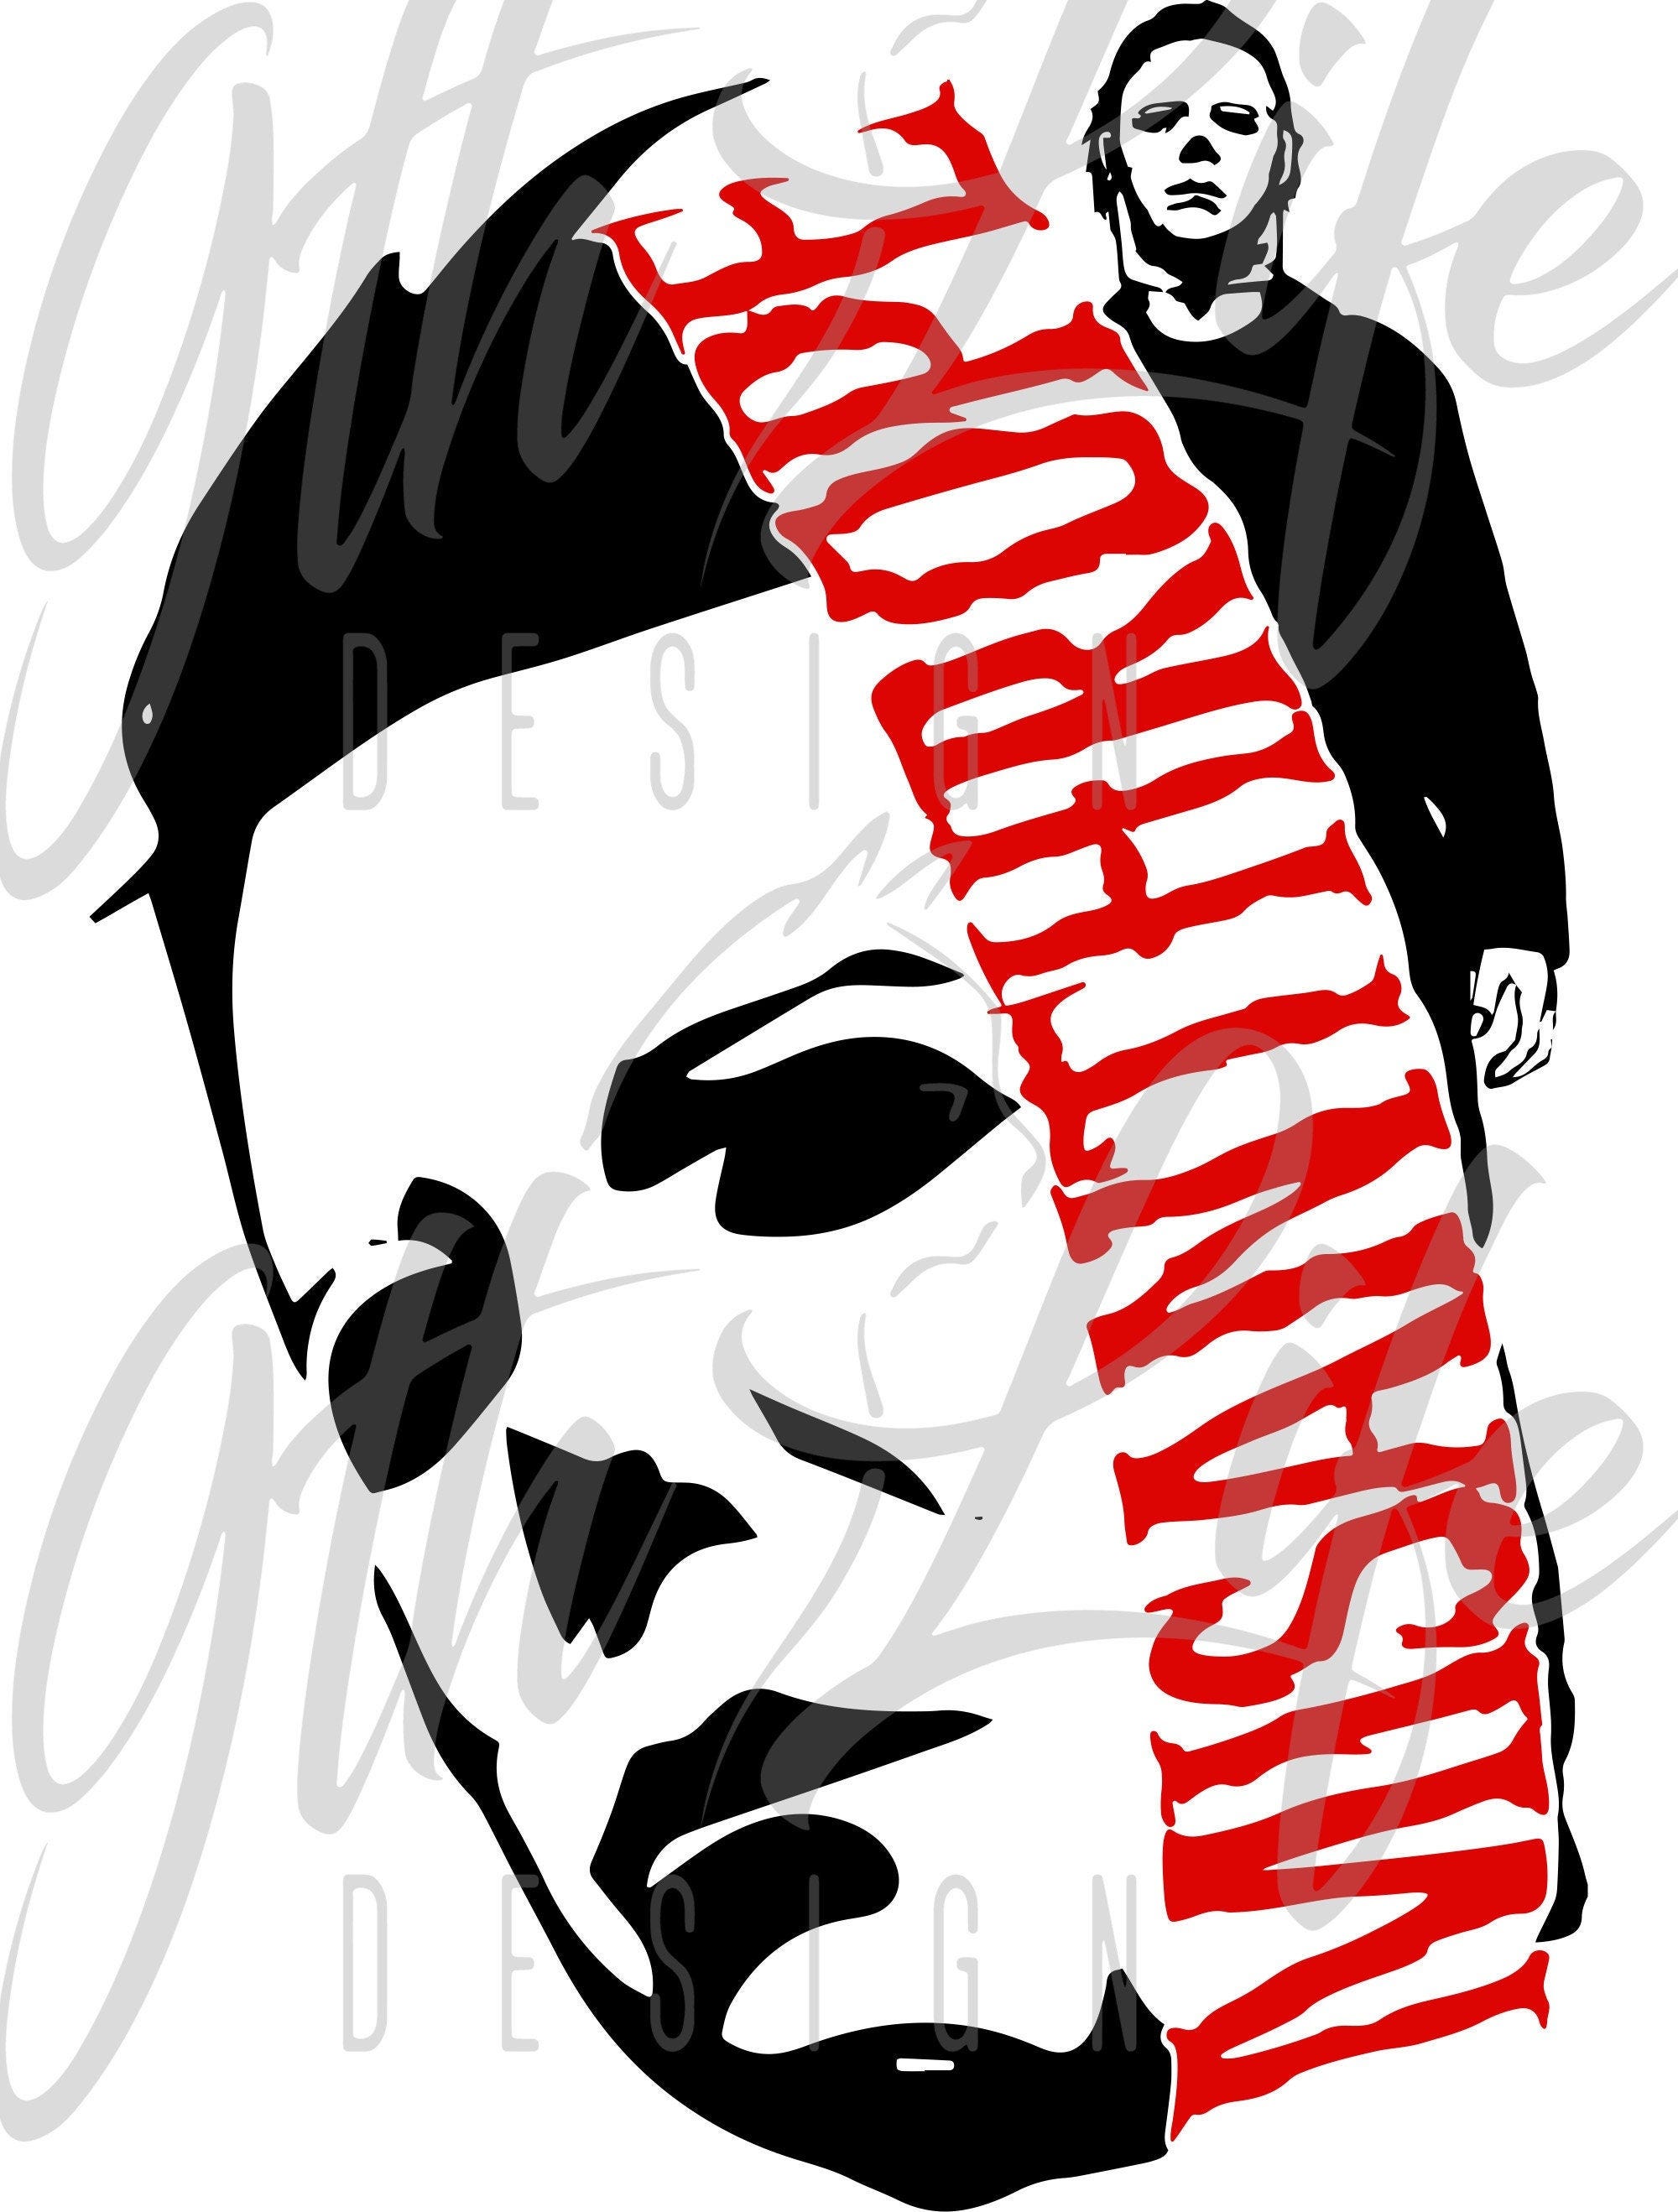 Misanthrope Michael Myers Halloween Killer Scary Horror Movie png svg jpg psd Vector Decal Sticker Mug Tshirt